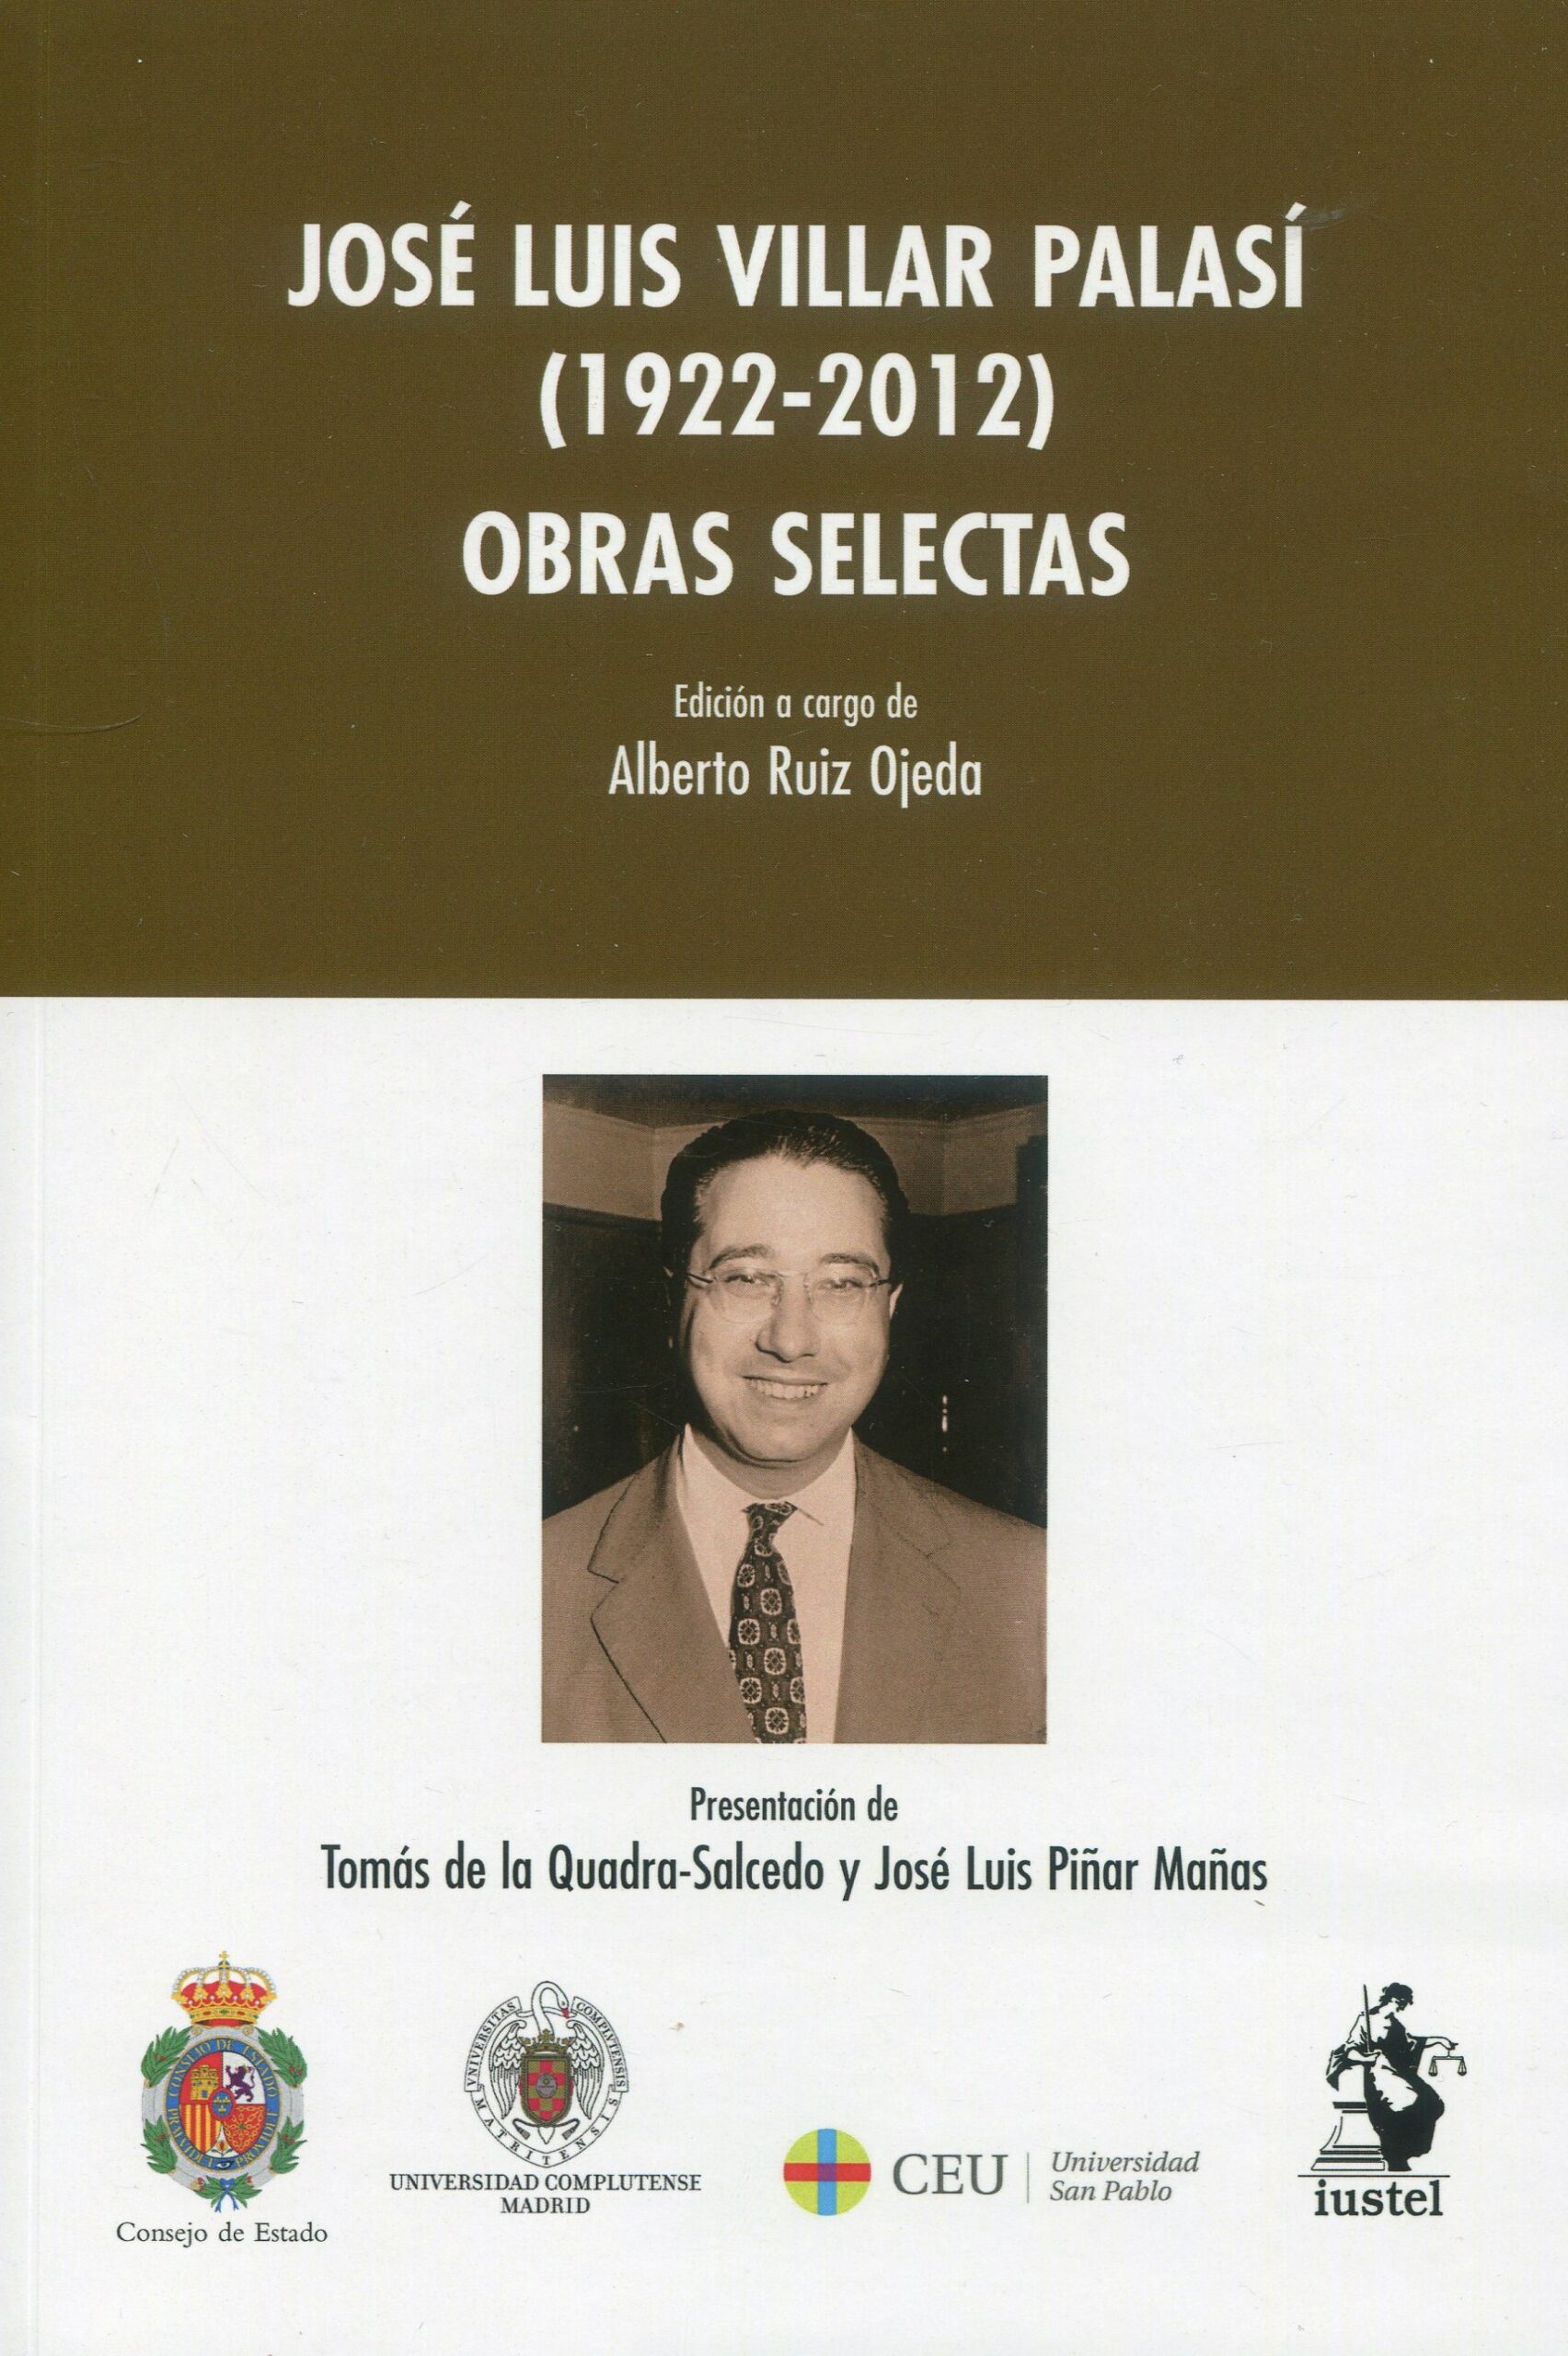 José Luis Villar Palasí (1922-2012)